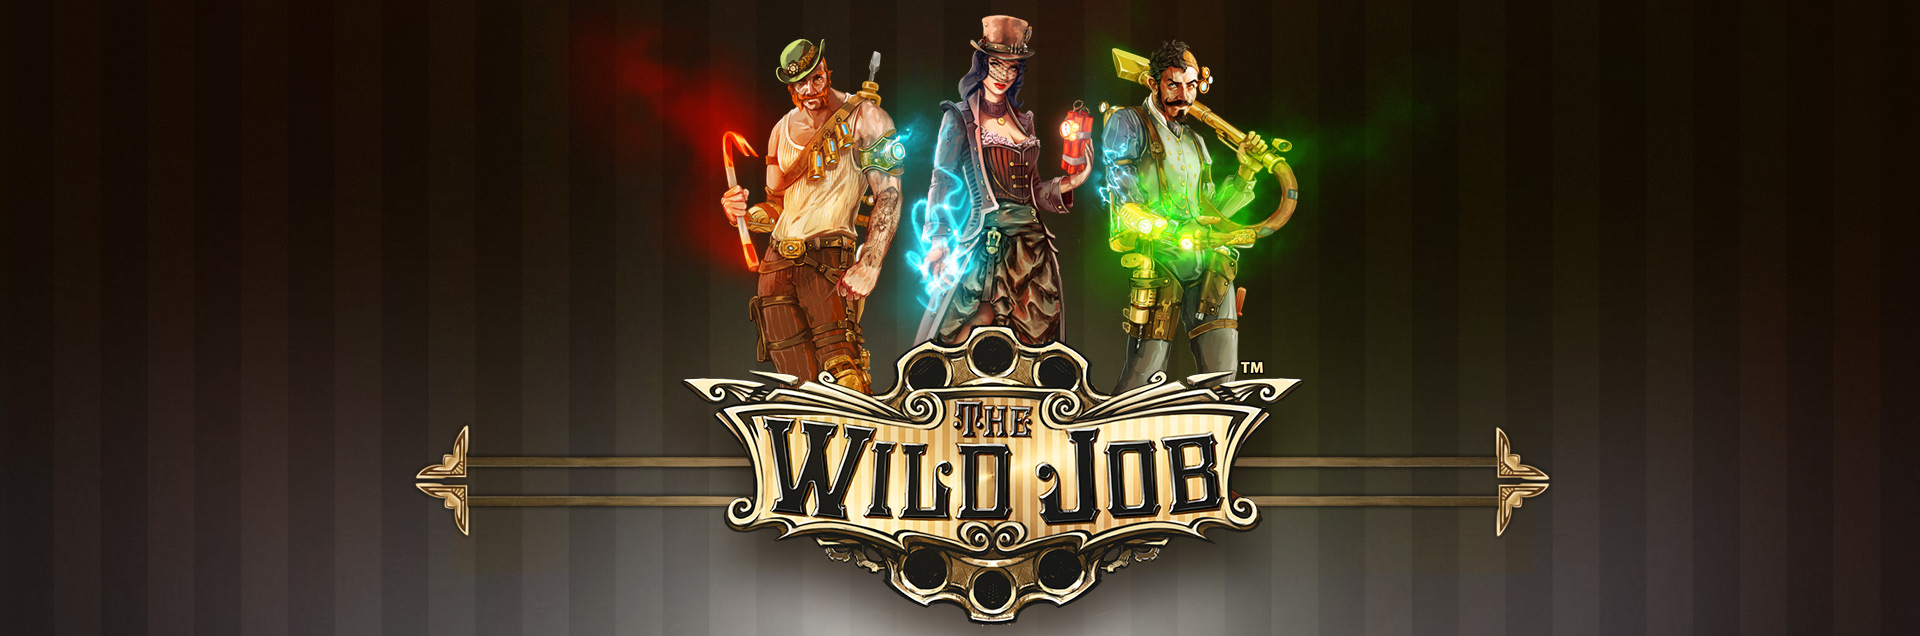 WildJob logo